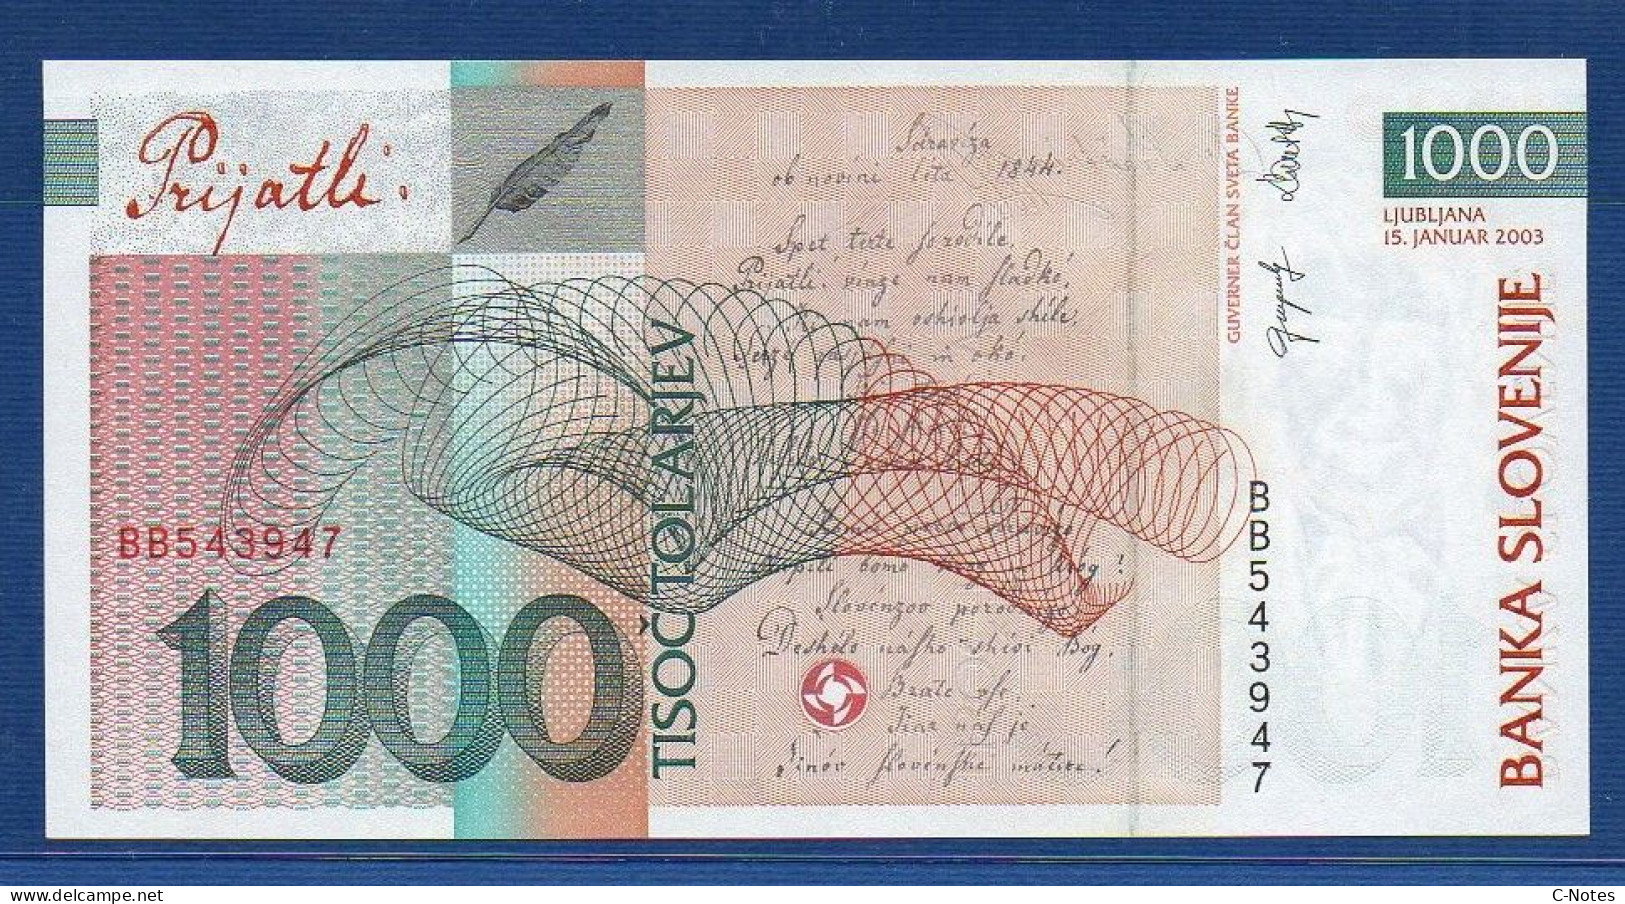 SLOVENIA - P.29 – 1000 Tolarjev 2004 UNC, S/n BB543947 "EU Entry" Commemorative Issue - Slovenia